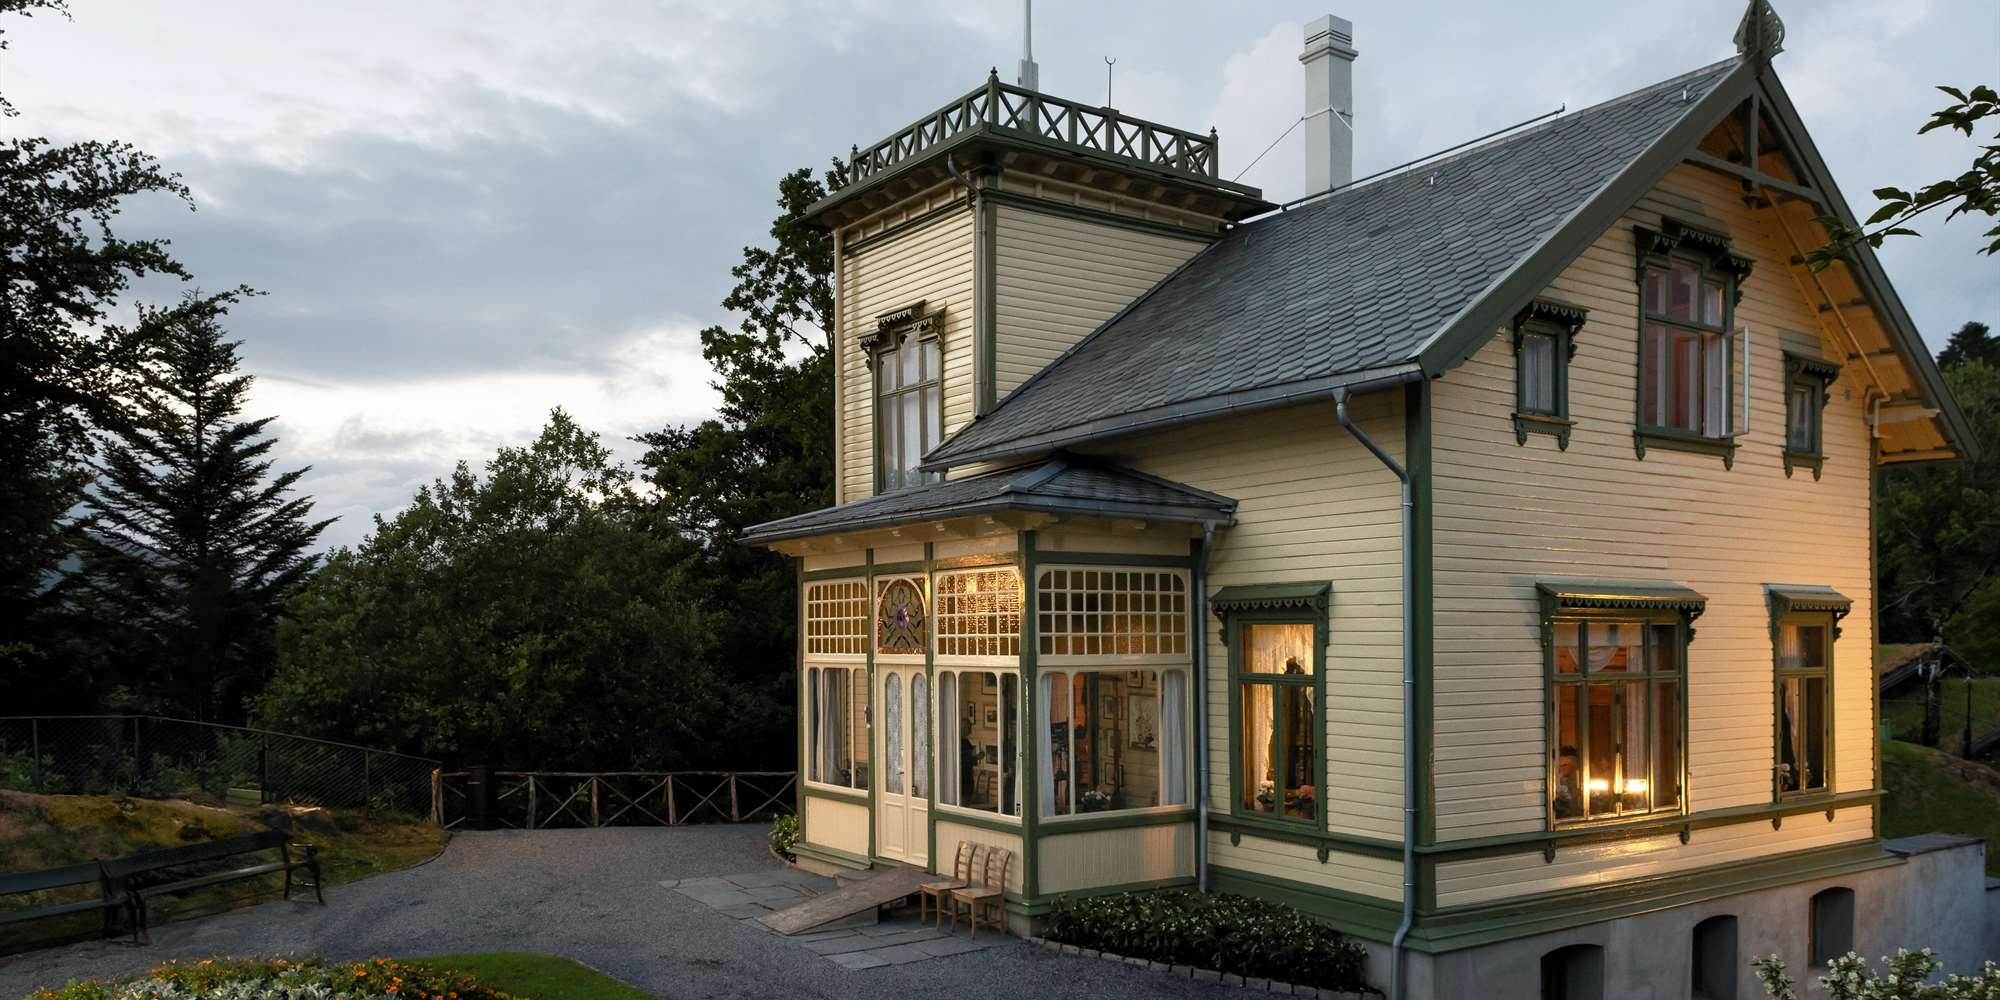 Troldhaugen Home of composer Edvard Grieg